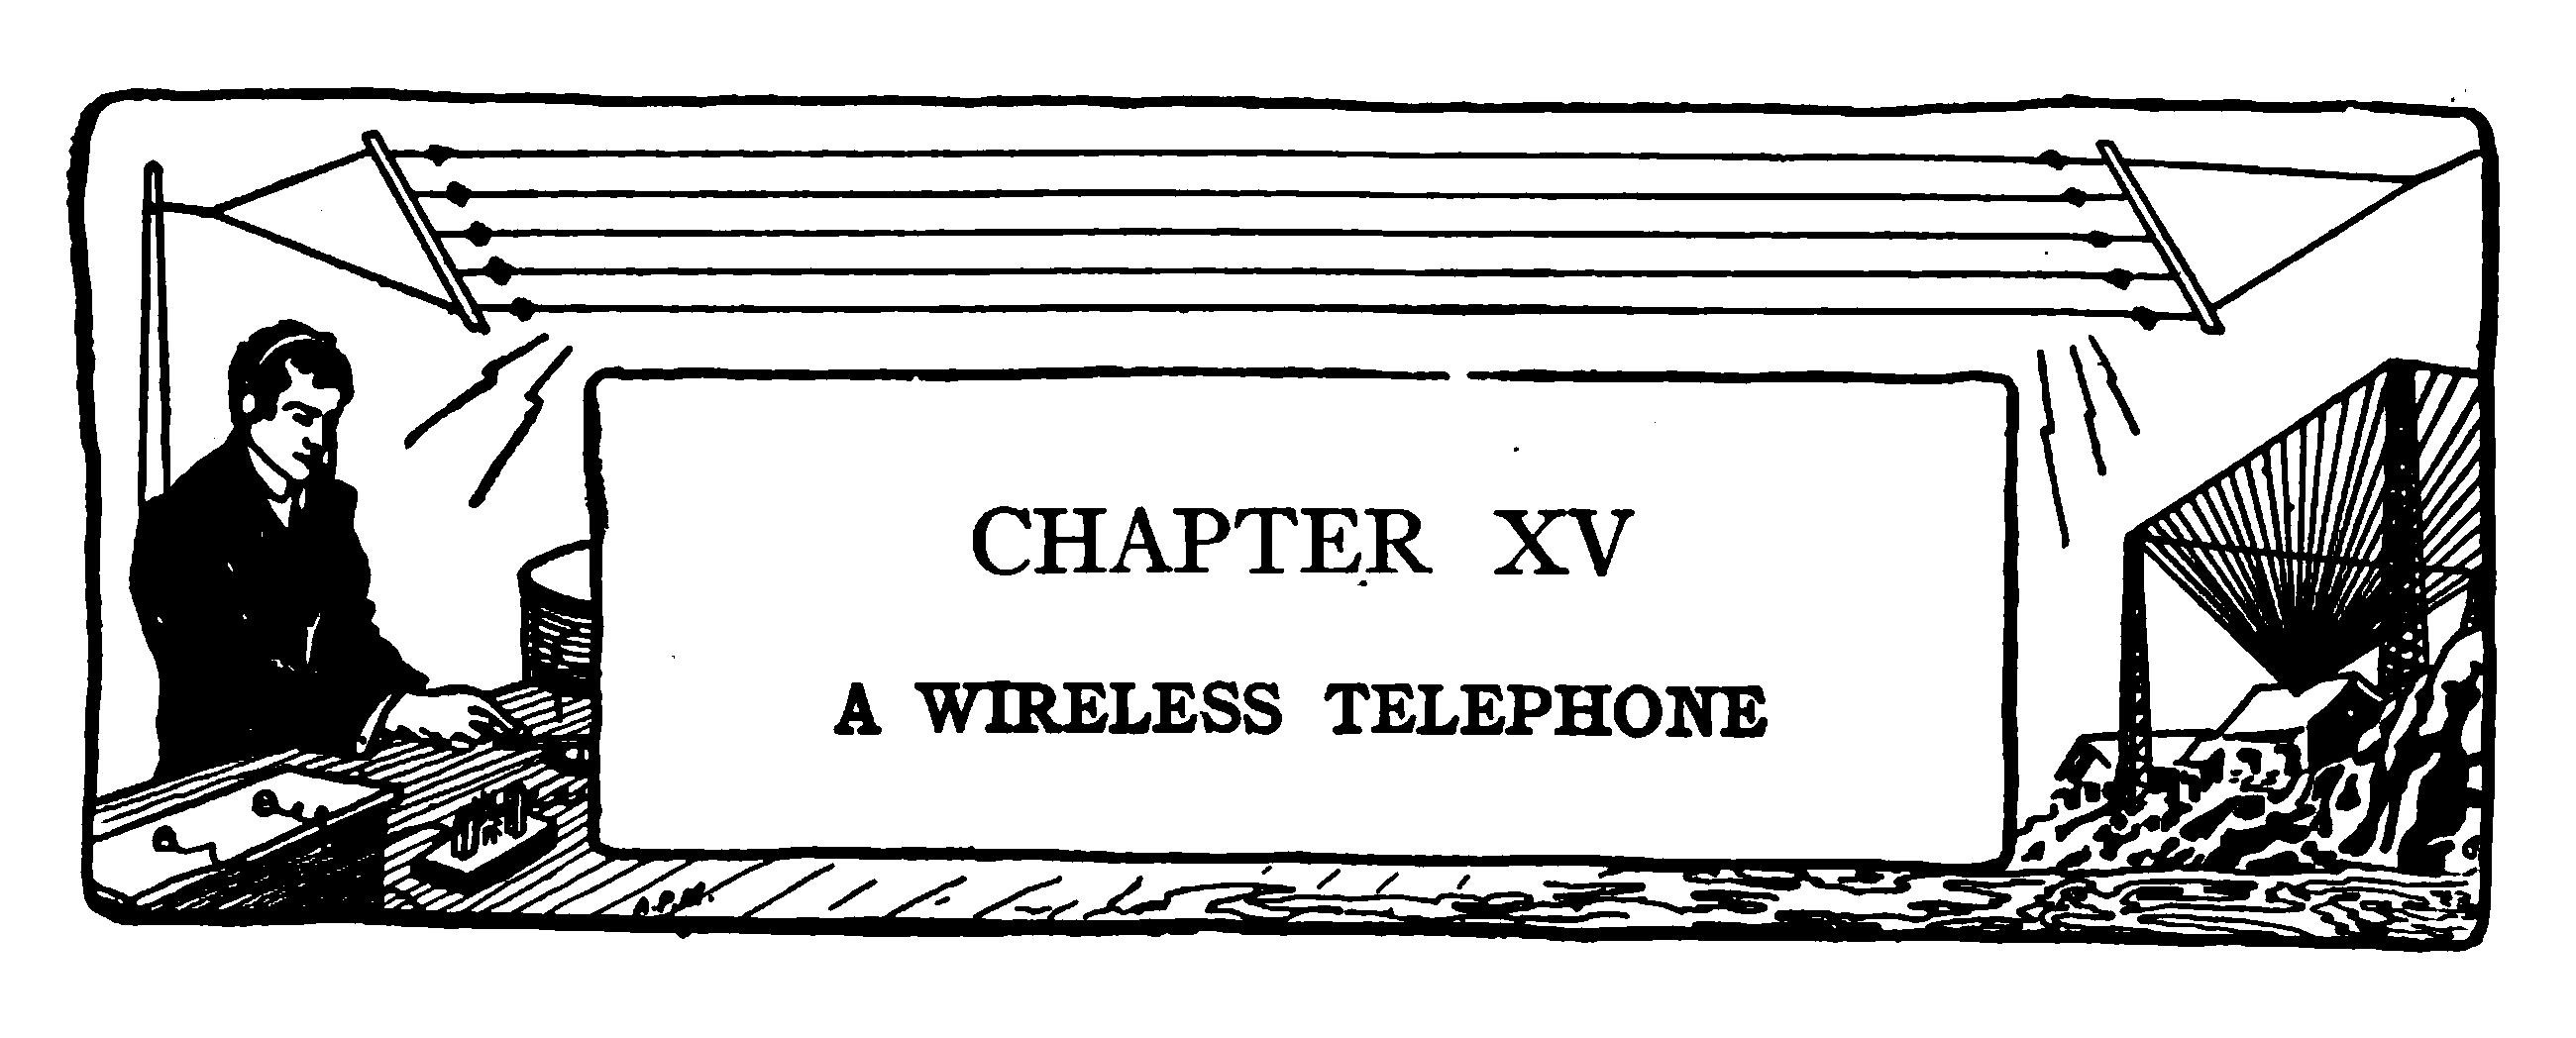 A WIRELESS TELEPHONE